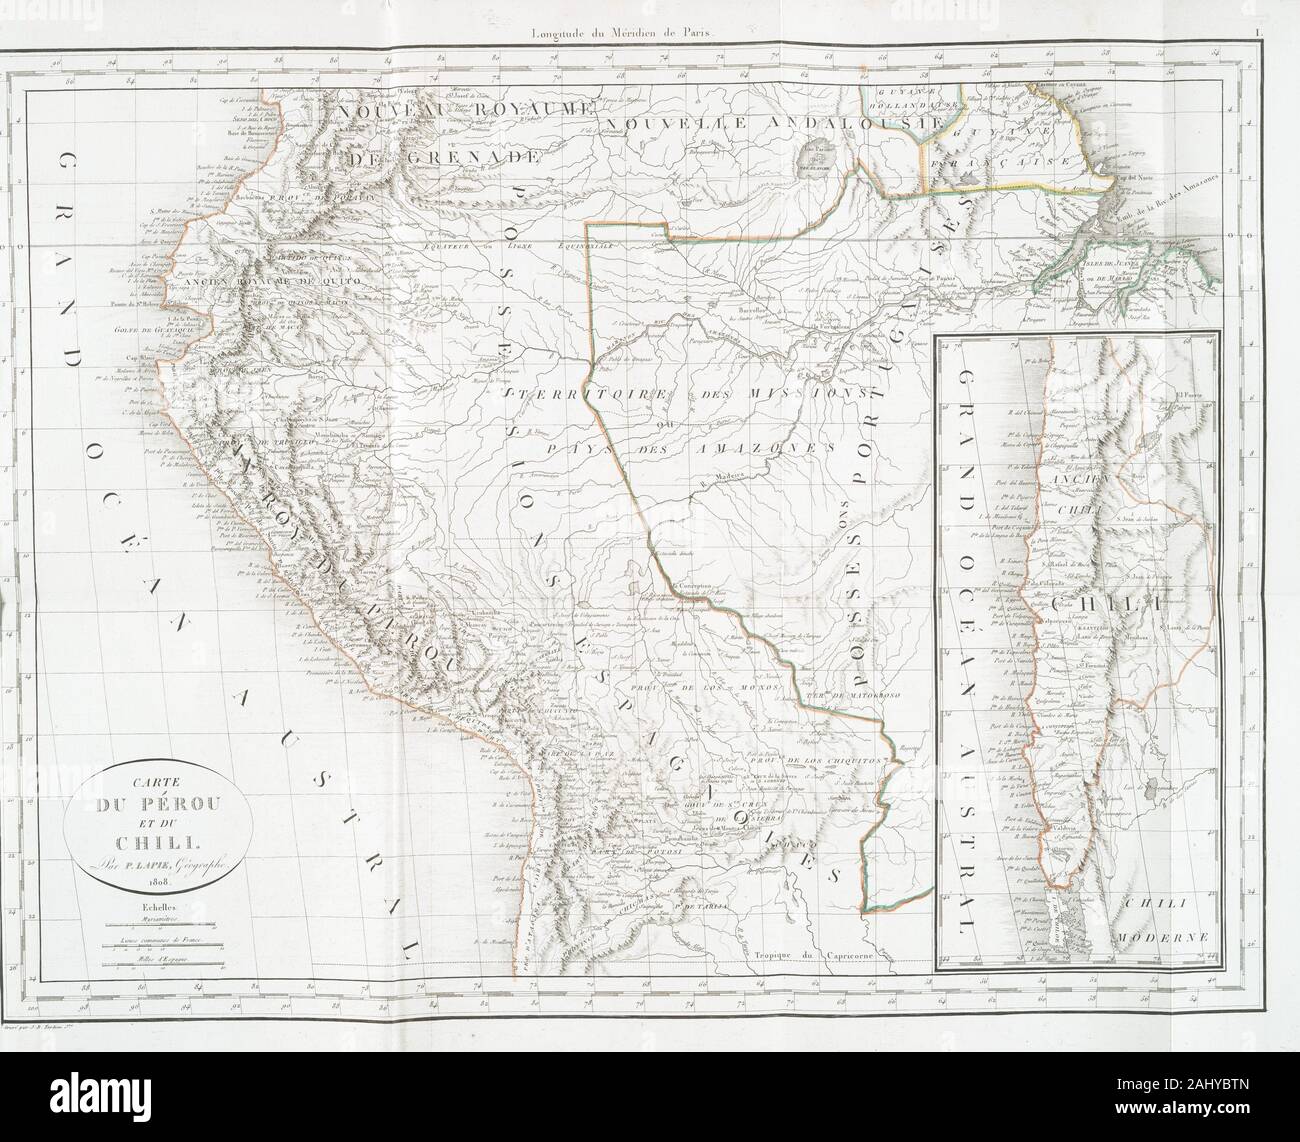 Map of Peru and Chile. Sobreviela, Manuel (d. 1803) (Author) Girbal Barcelo, Narciso (Author) Lapie, M. (Pierre) (1779-1850) (Cartographer) Tardieu, Stock Photo